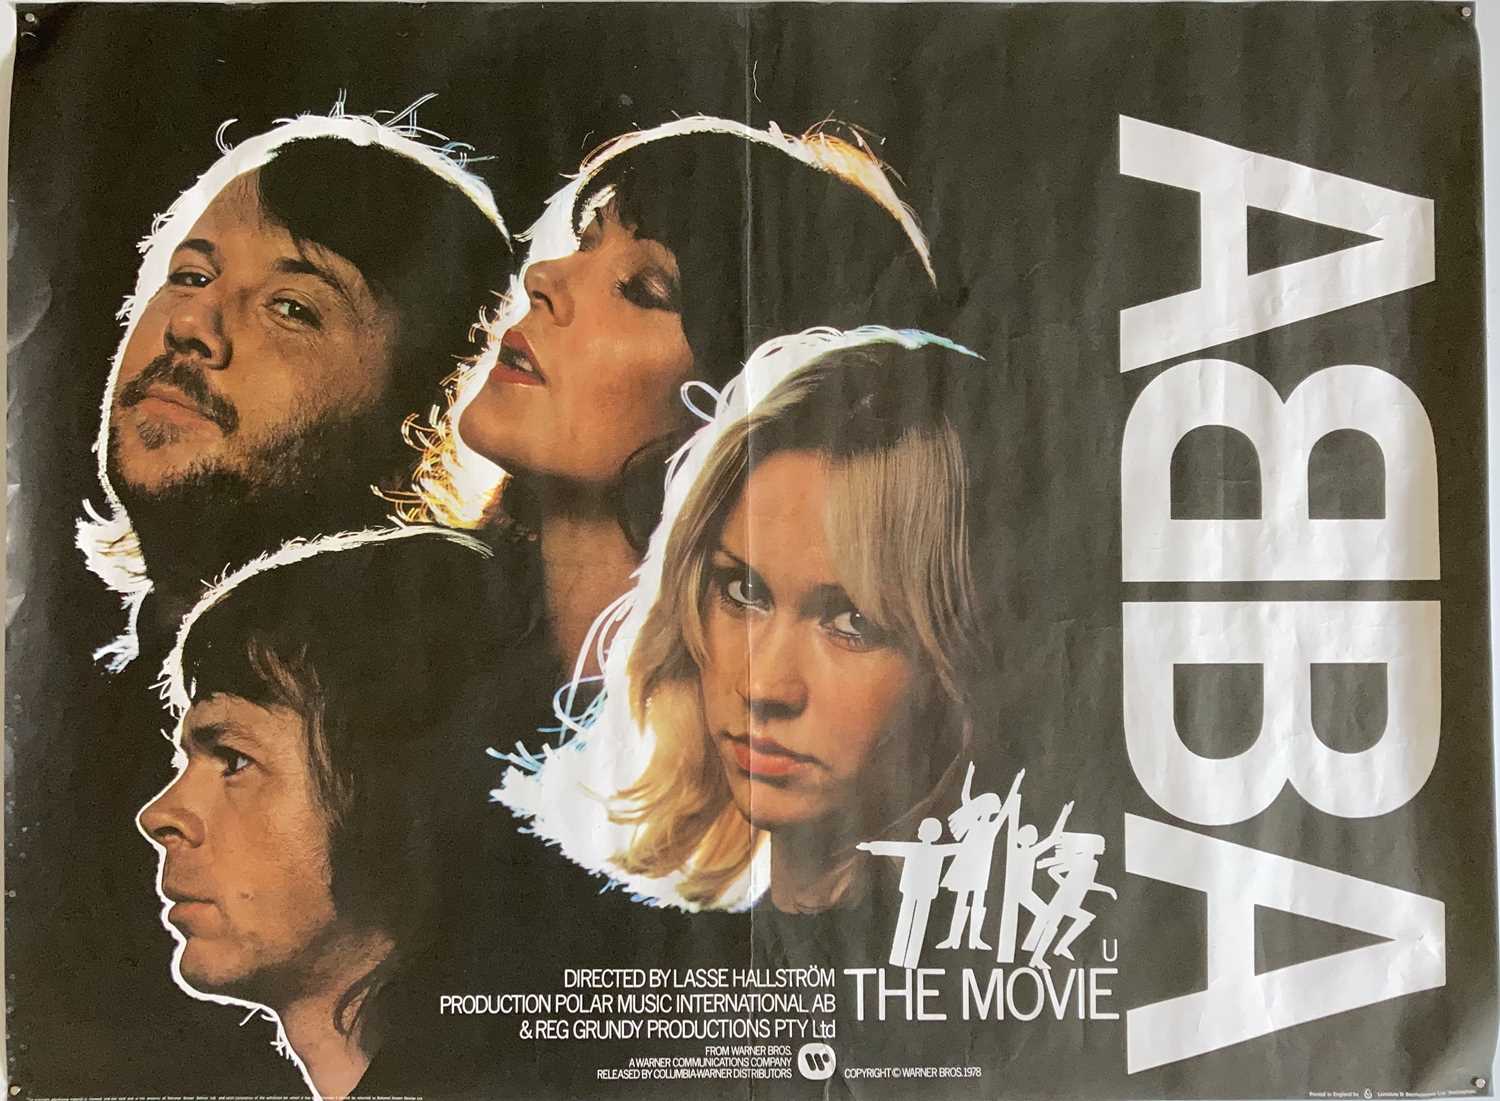 Lot 26 - ABBA FILM POSTER.